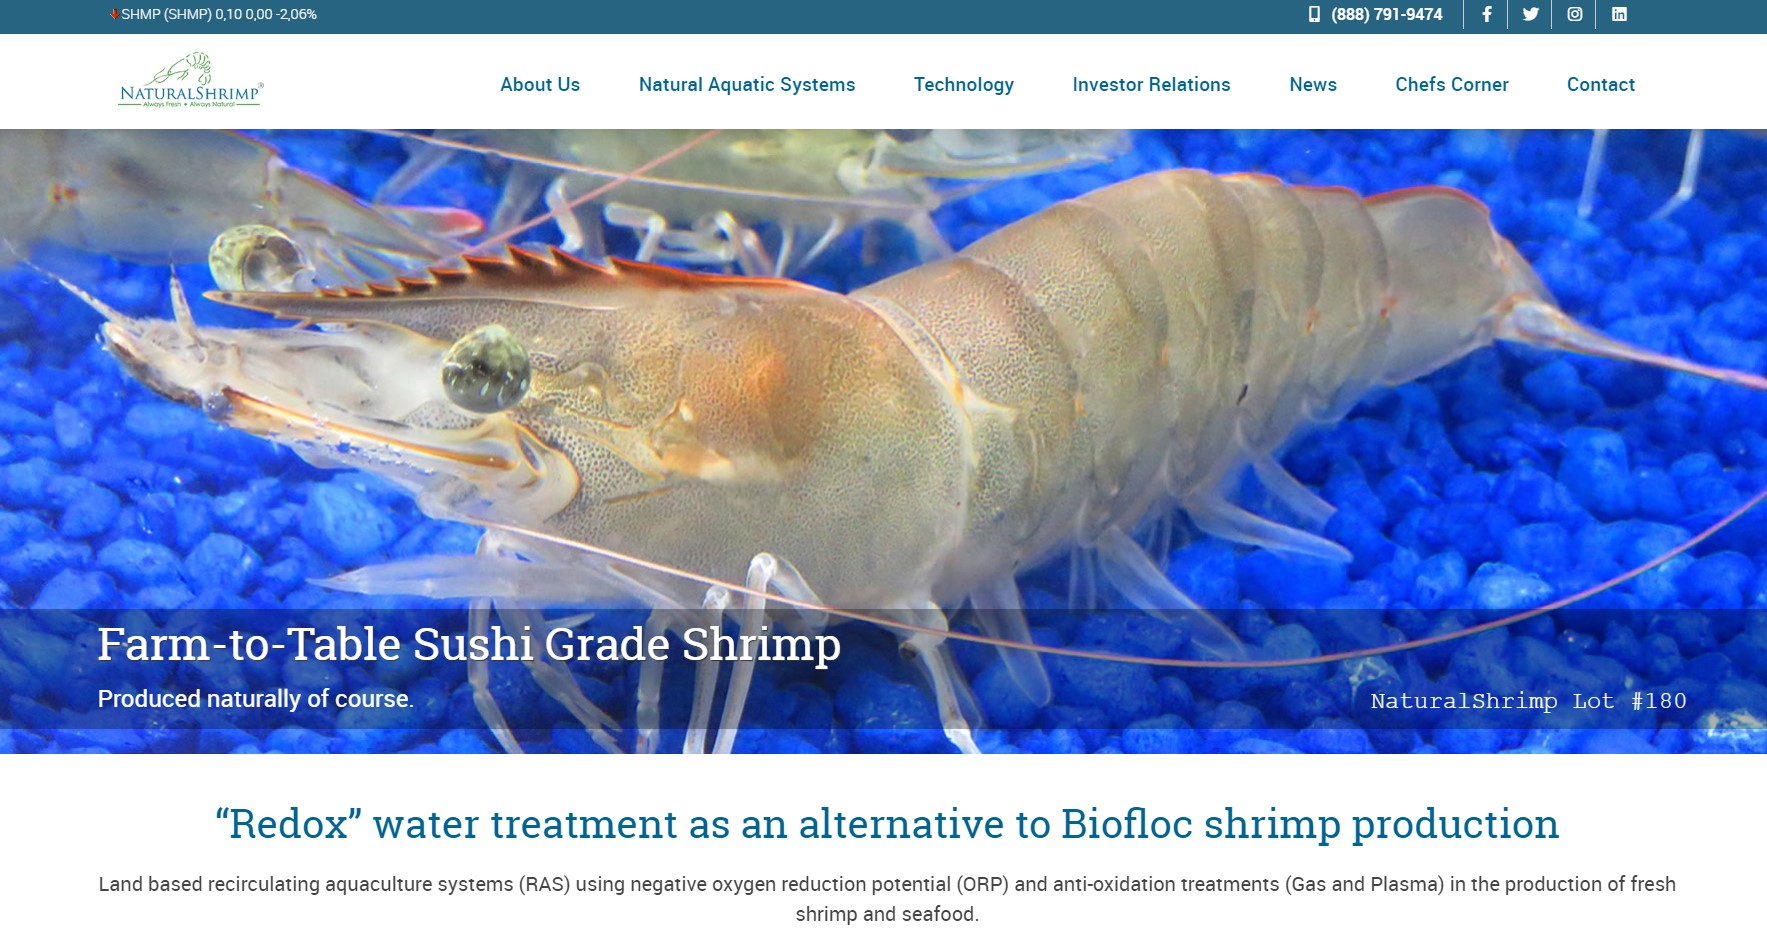 Texas Shrimp Producer NaturalShrimp Conducting Final Tests in Enclosed Salt Water Systems